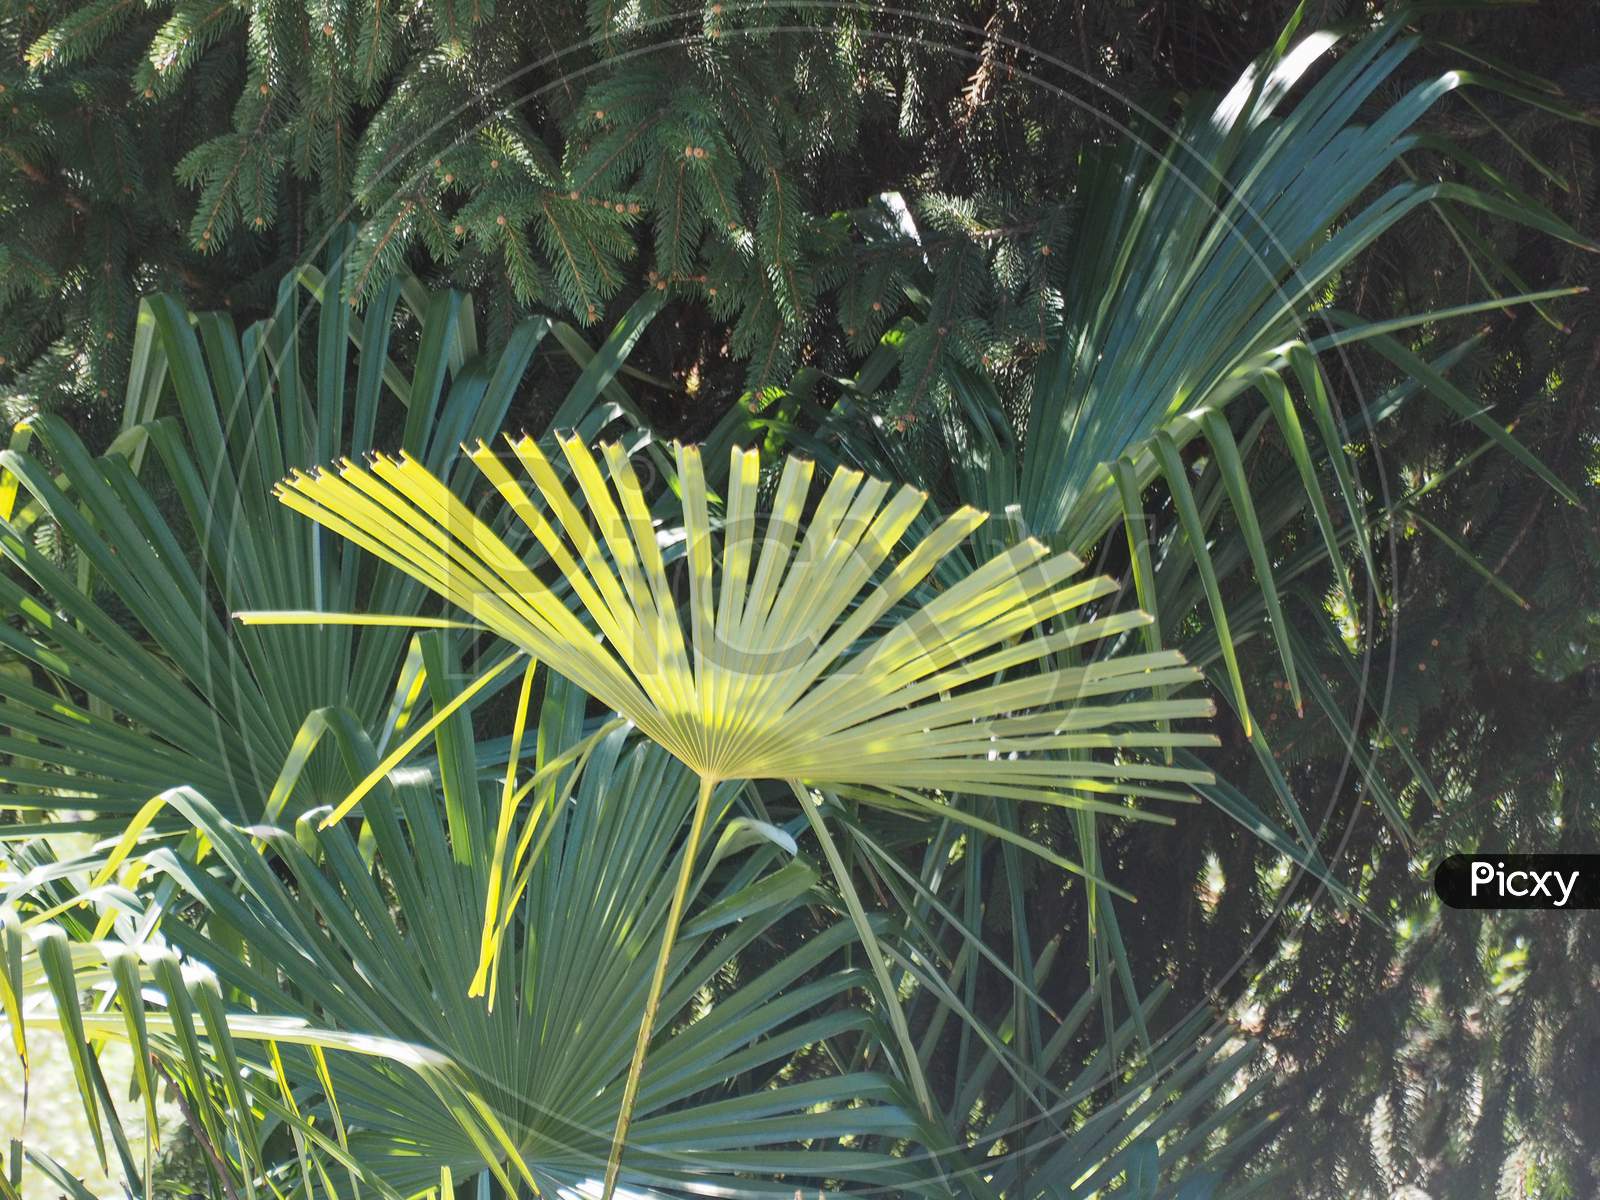 Palm Tree Leaf Background